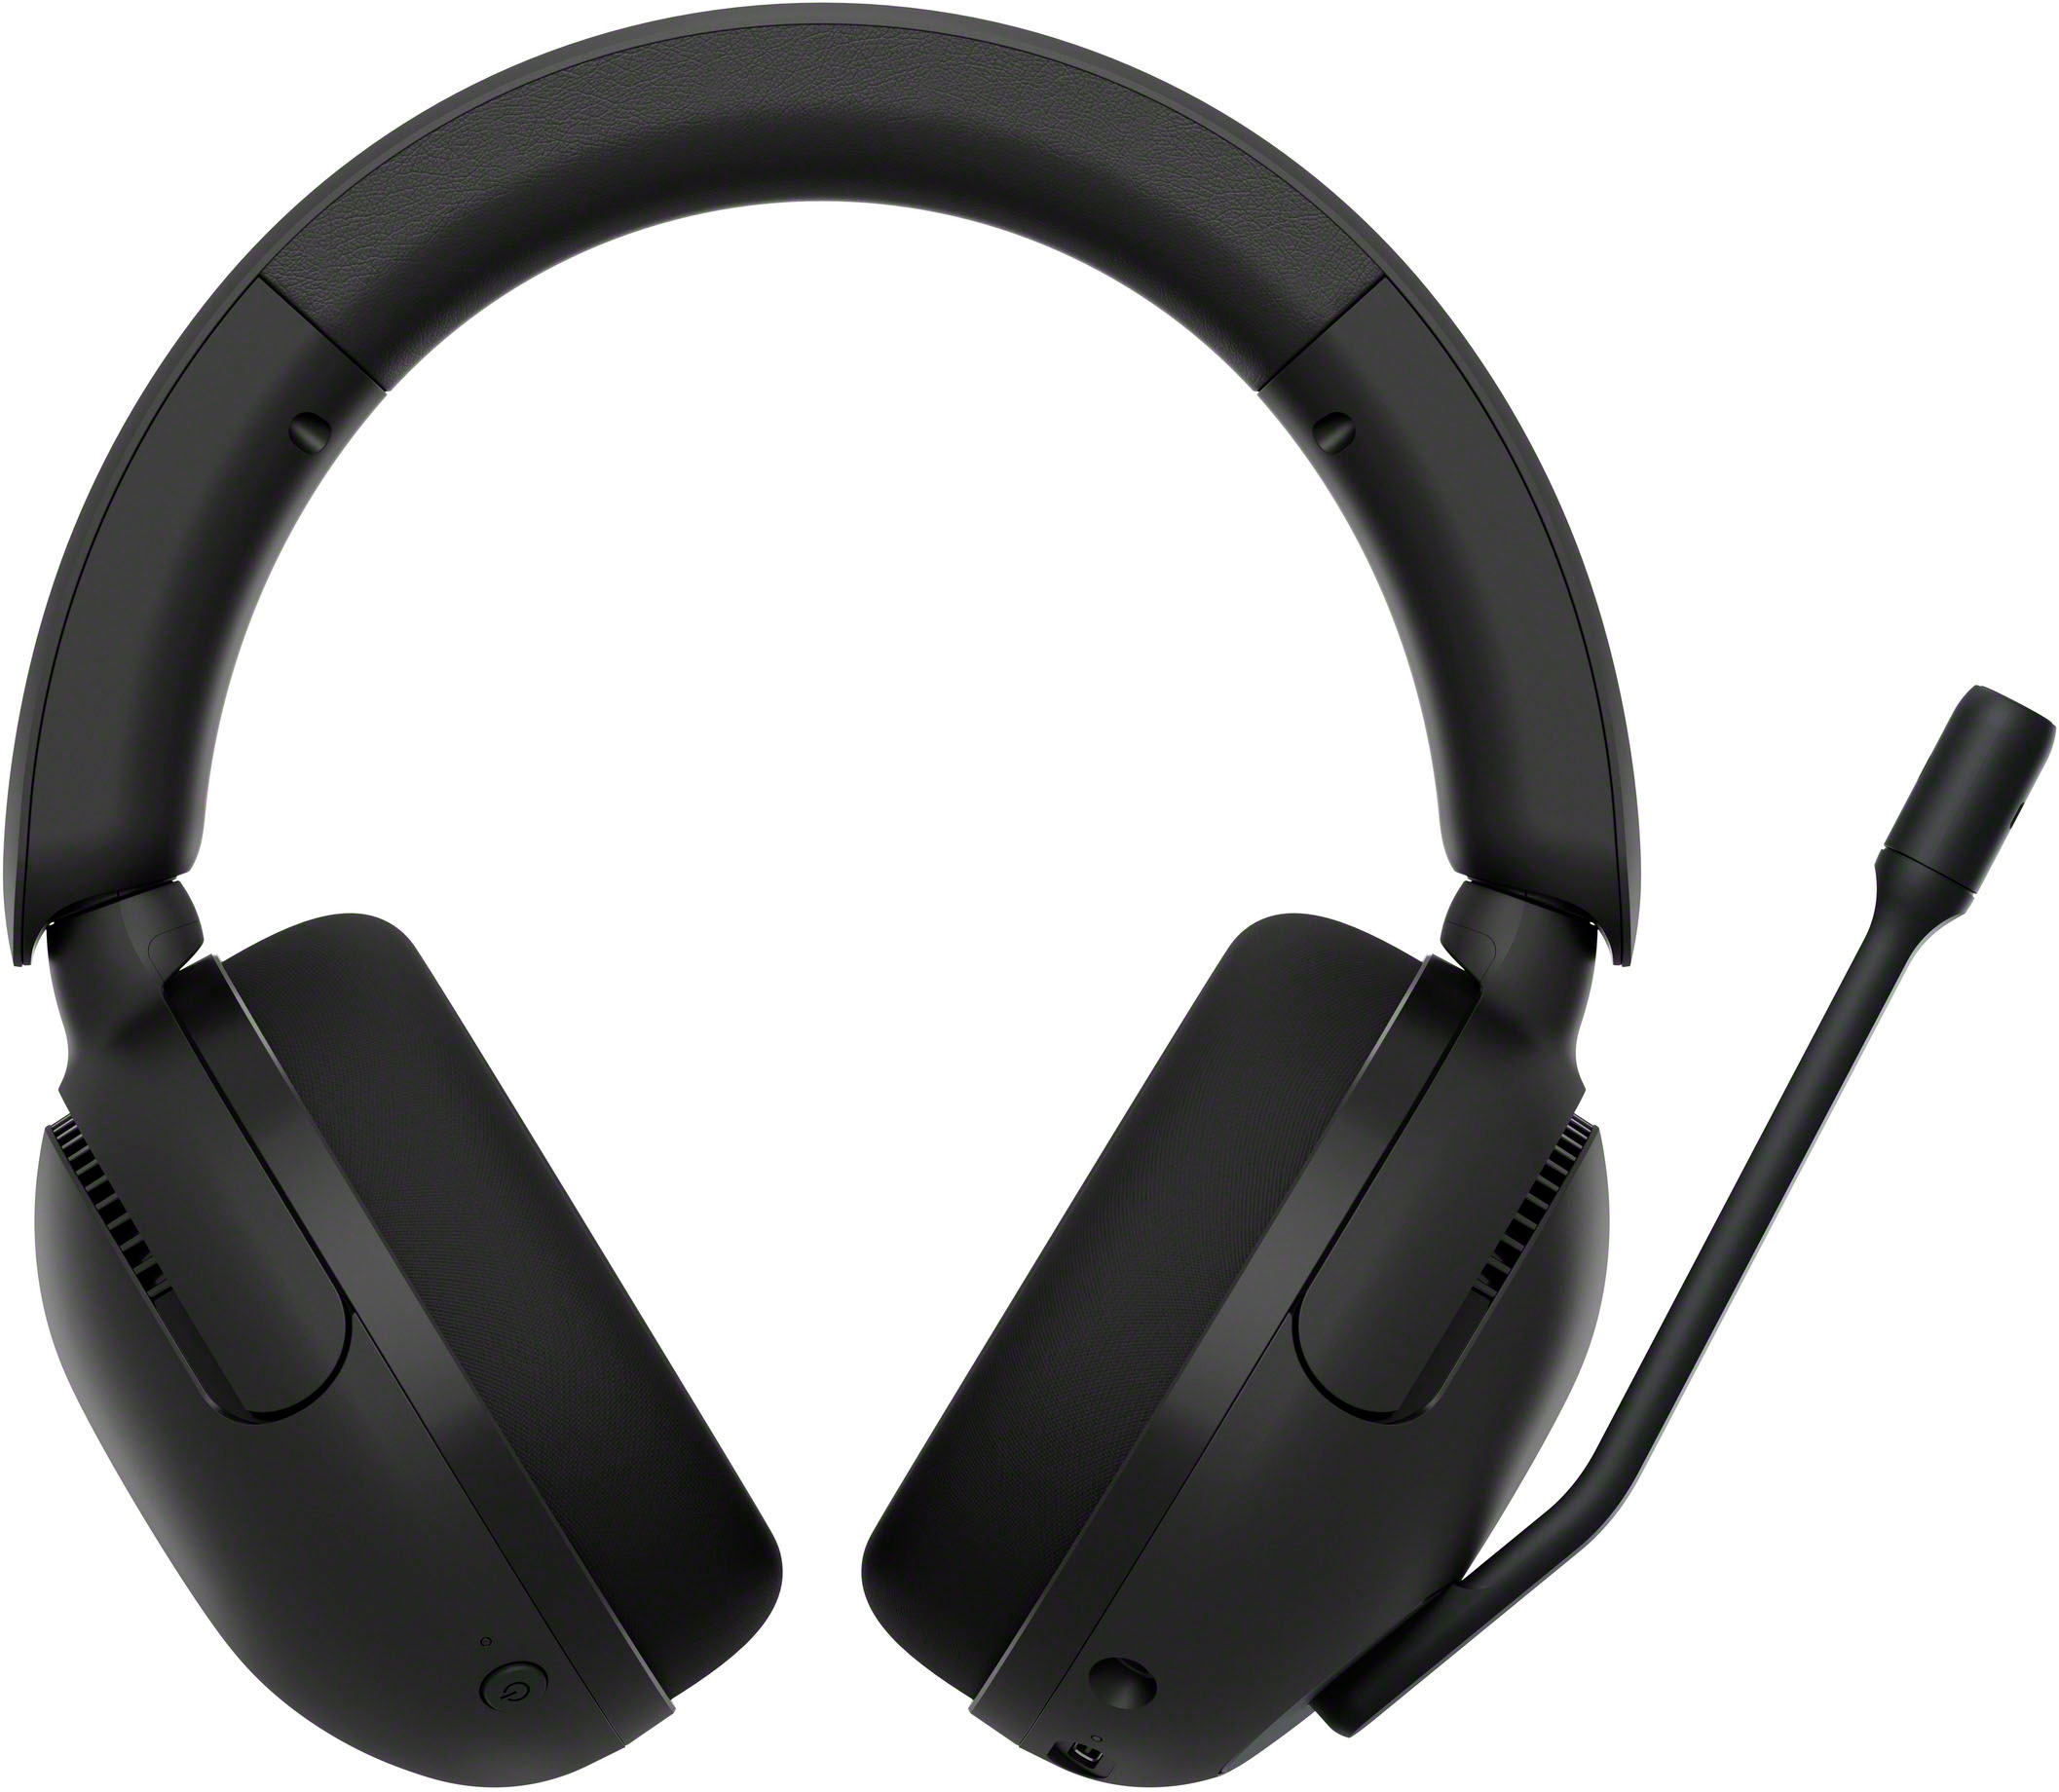 Sony INZONE H5 Wireless Gaming Headset Black WHG500/B - Best Buy